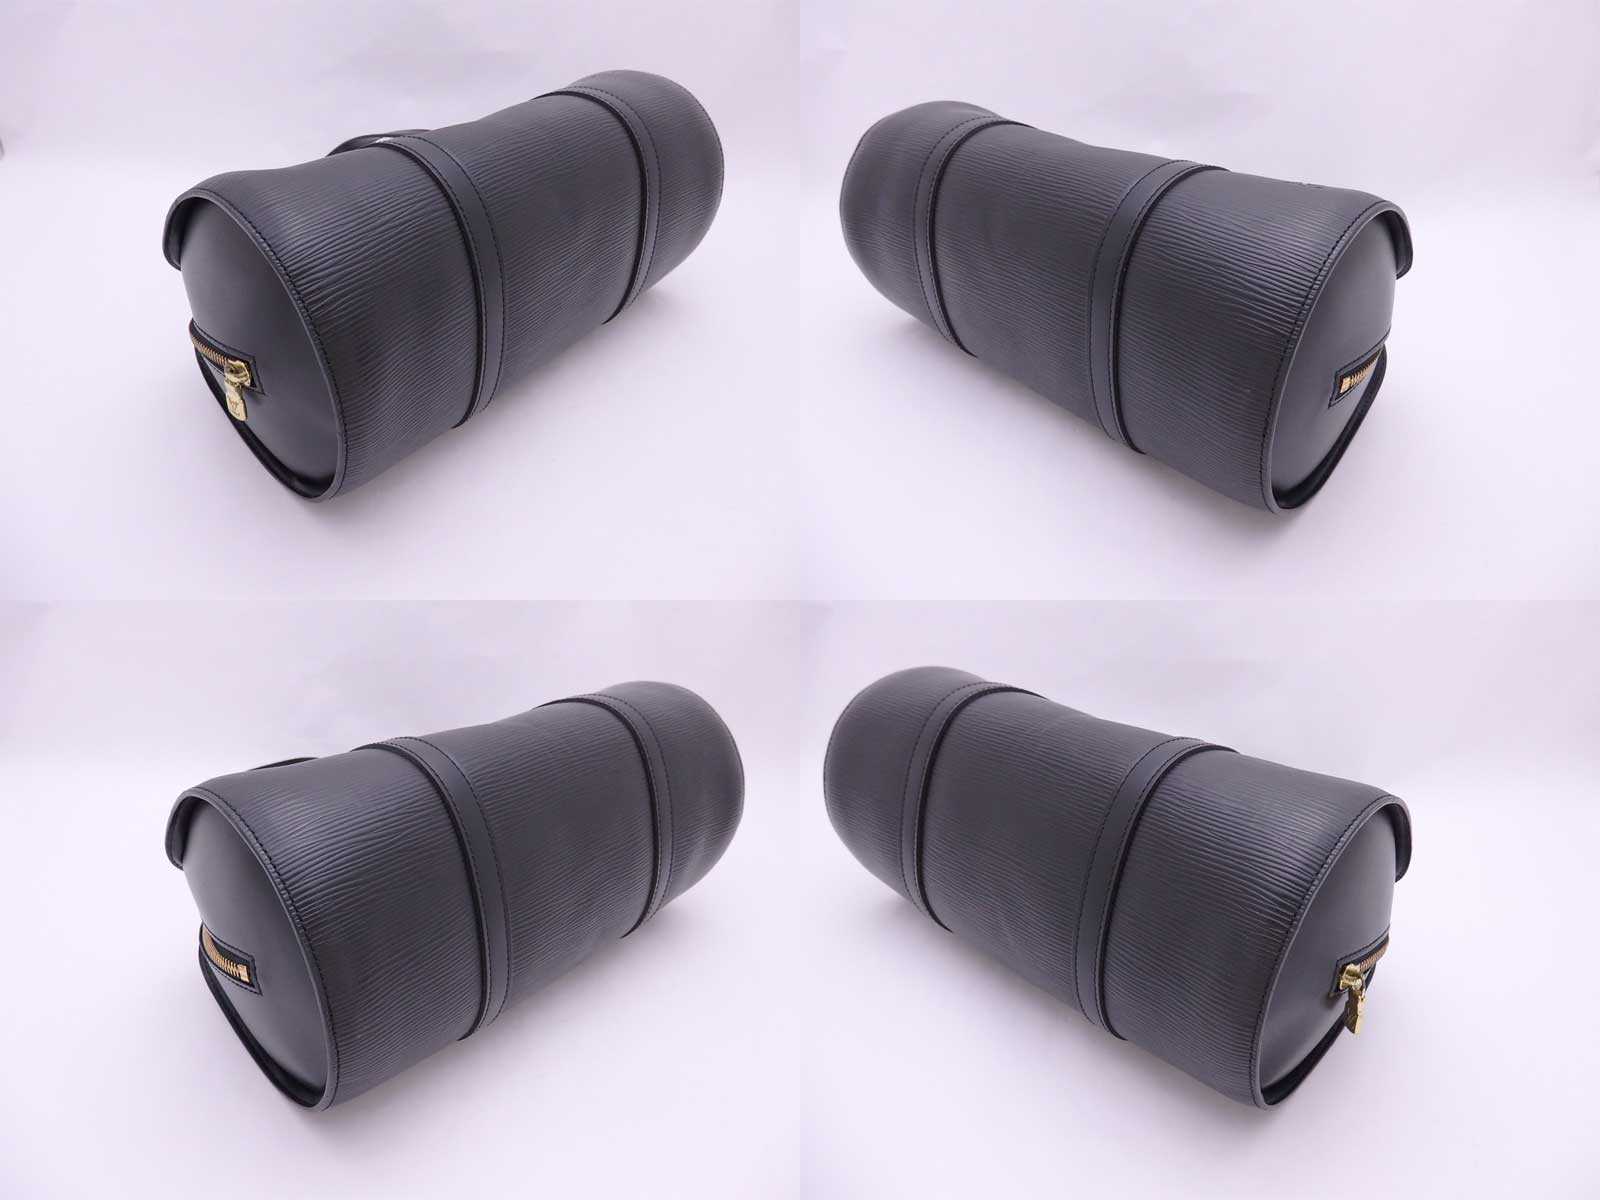 Auth Louis Vuitton Epi Soufflot Handbag Black/Goldtone Epi Leather - e45247d | eBay